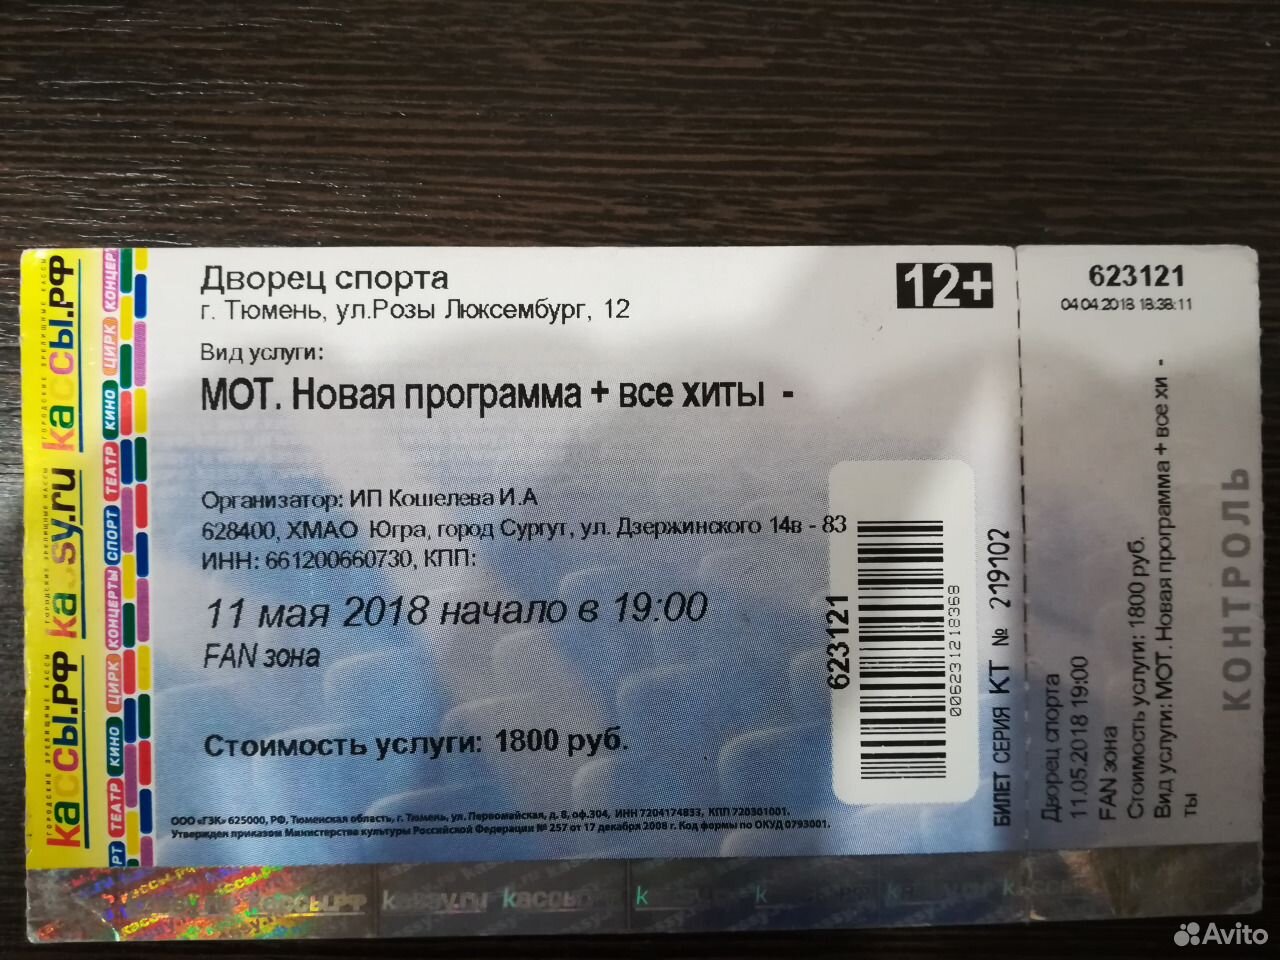 Серпухов купить билет на концерт. Билет на концерт. Как выглядит билет на концерт. Что такое билет на концерт фан зона. Мот билеты.